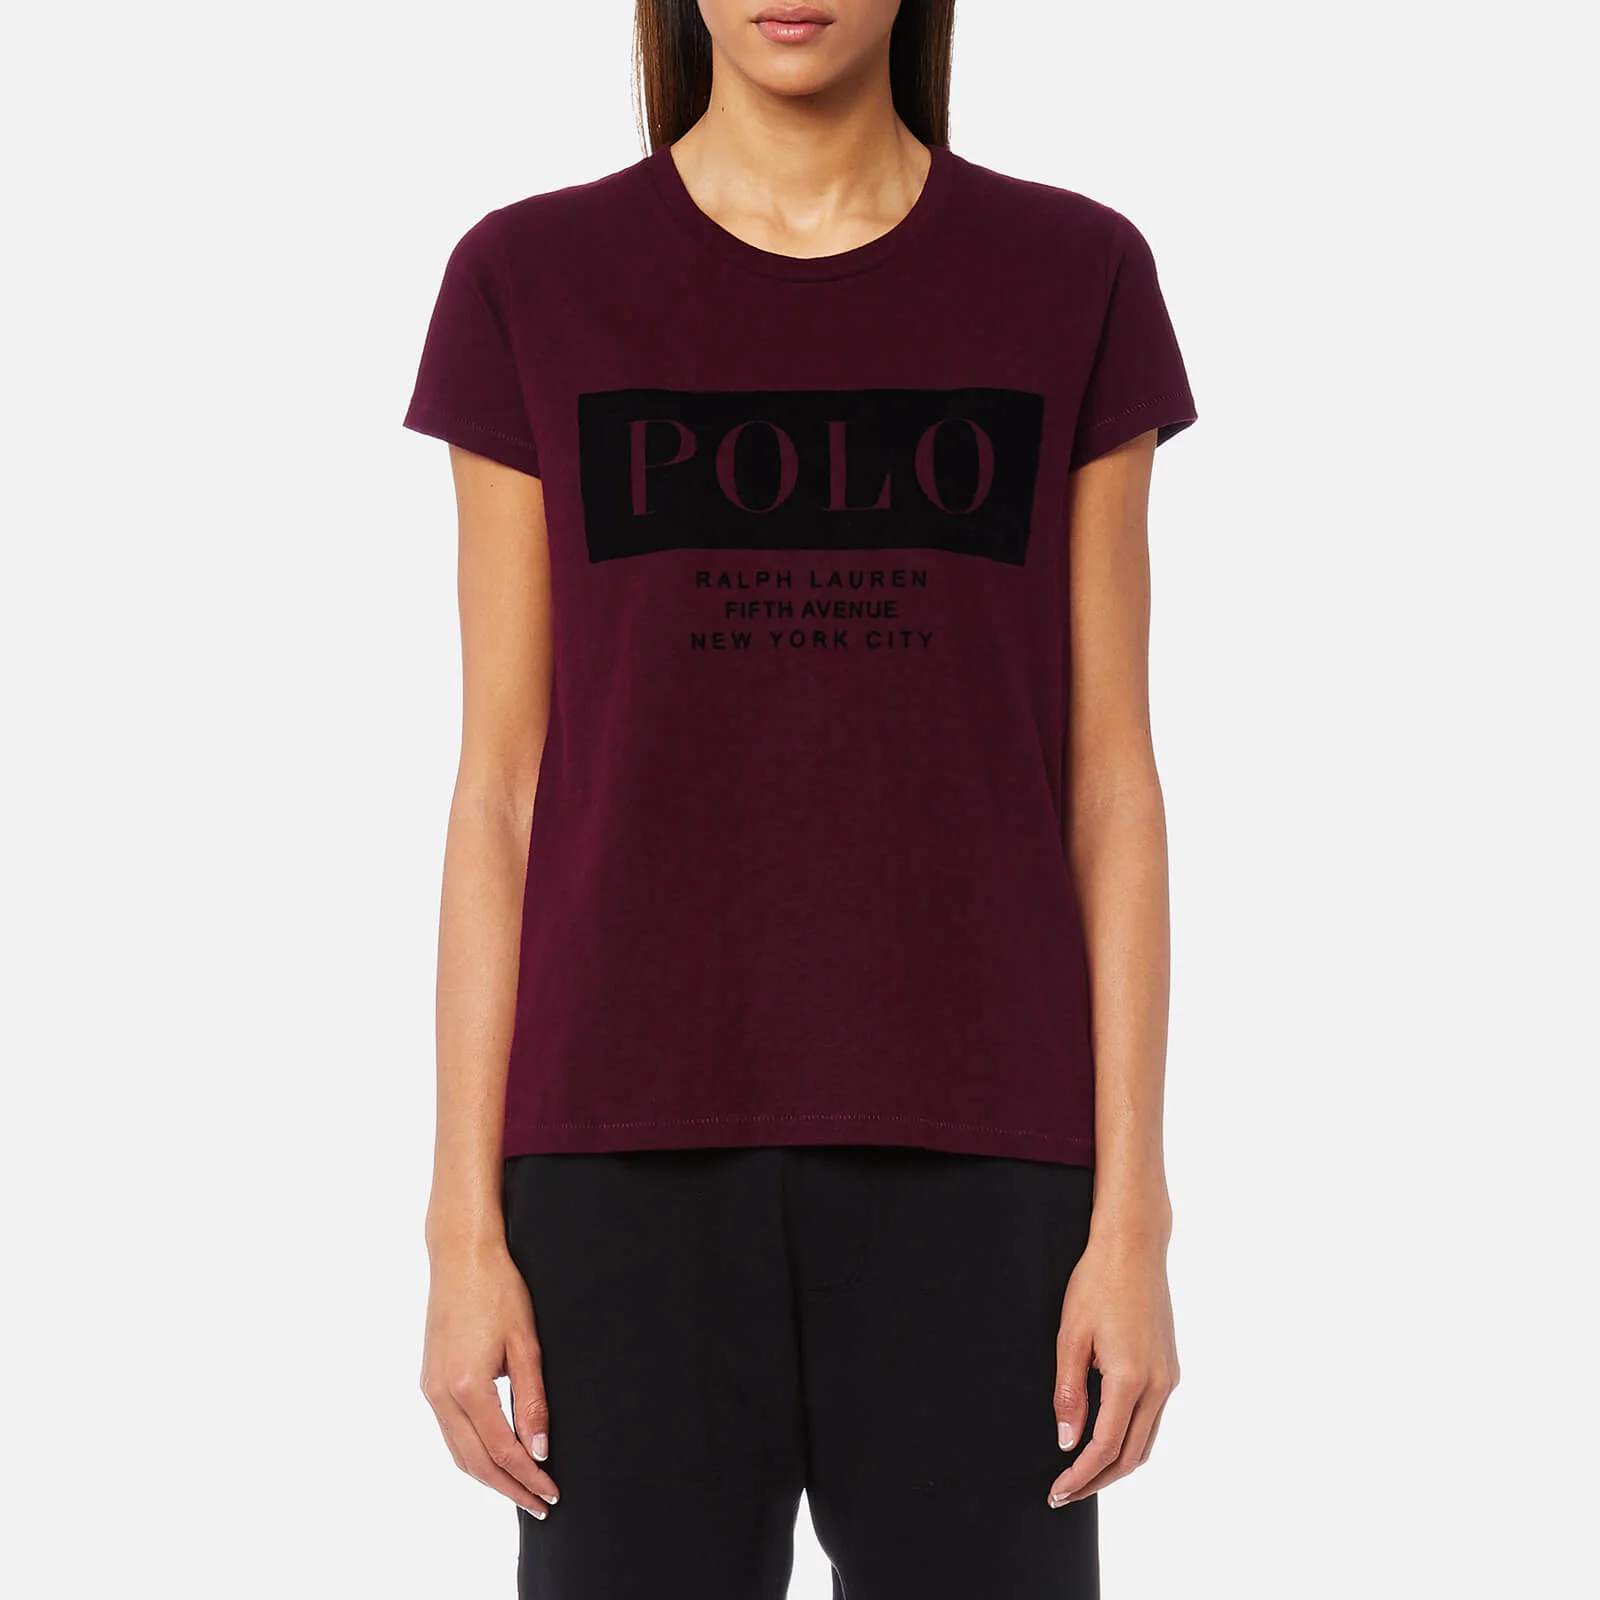 Polo Ralph Lauren Women's Fl Polo T-Shirt - Burgundy Image 1